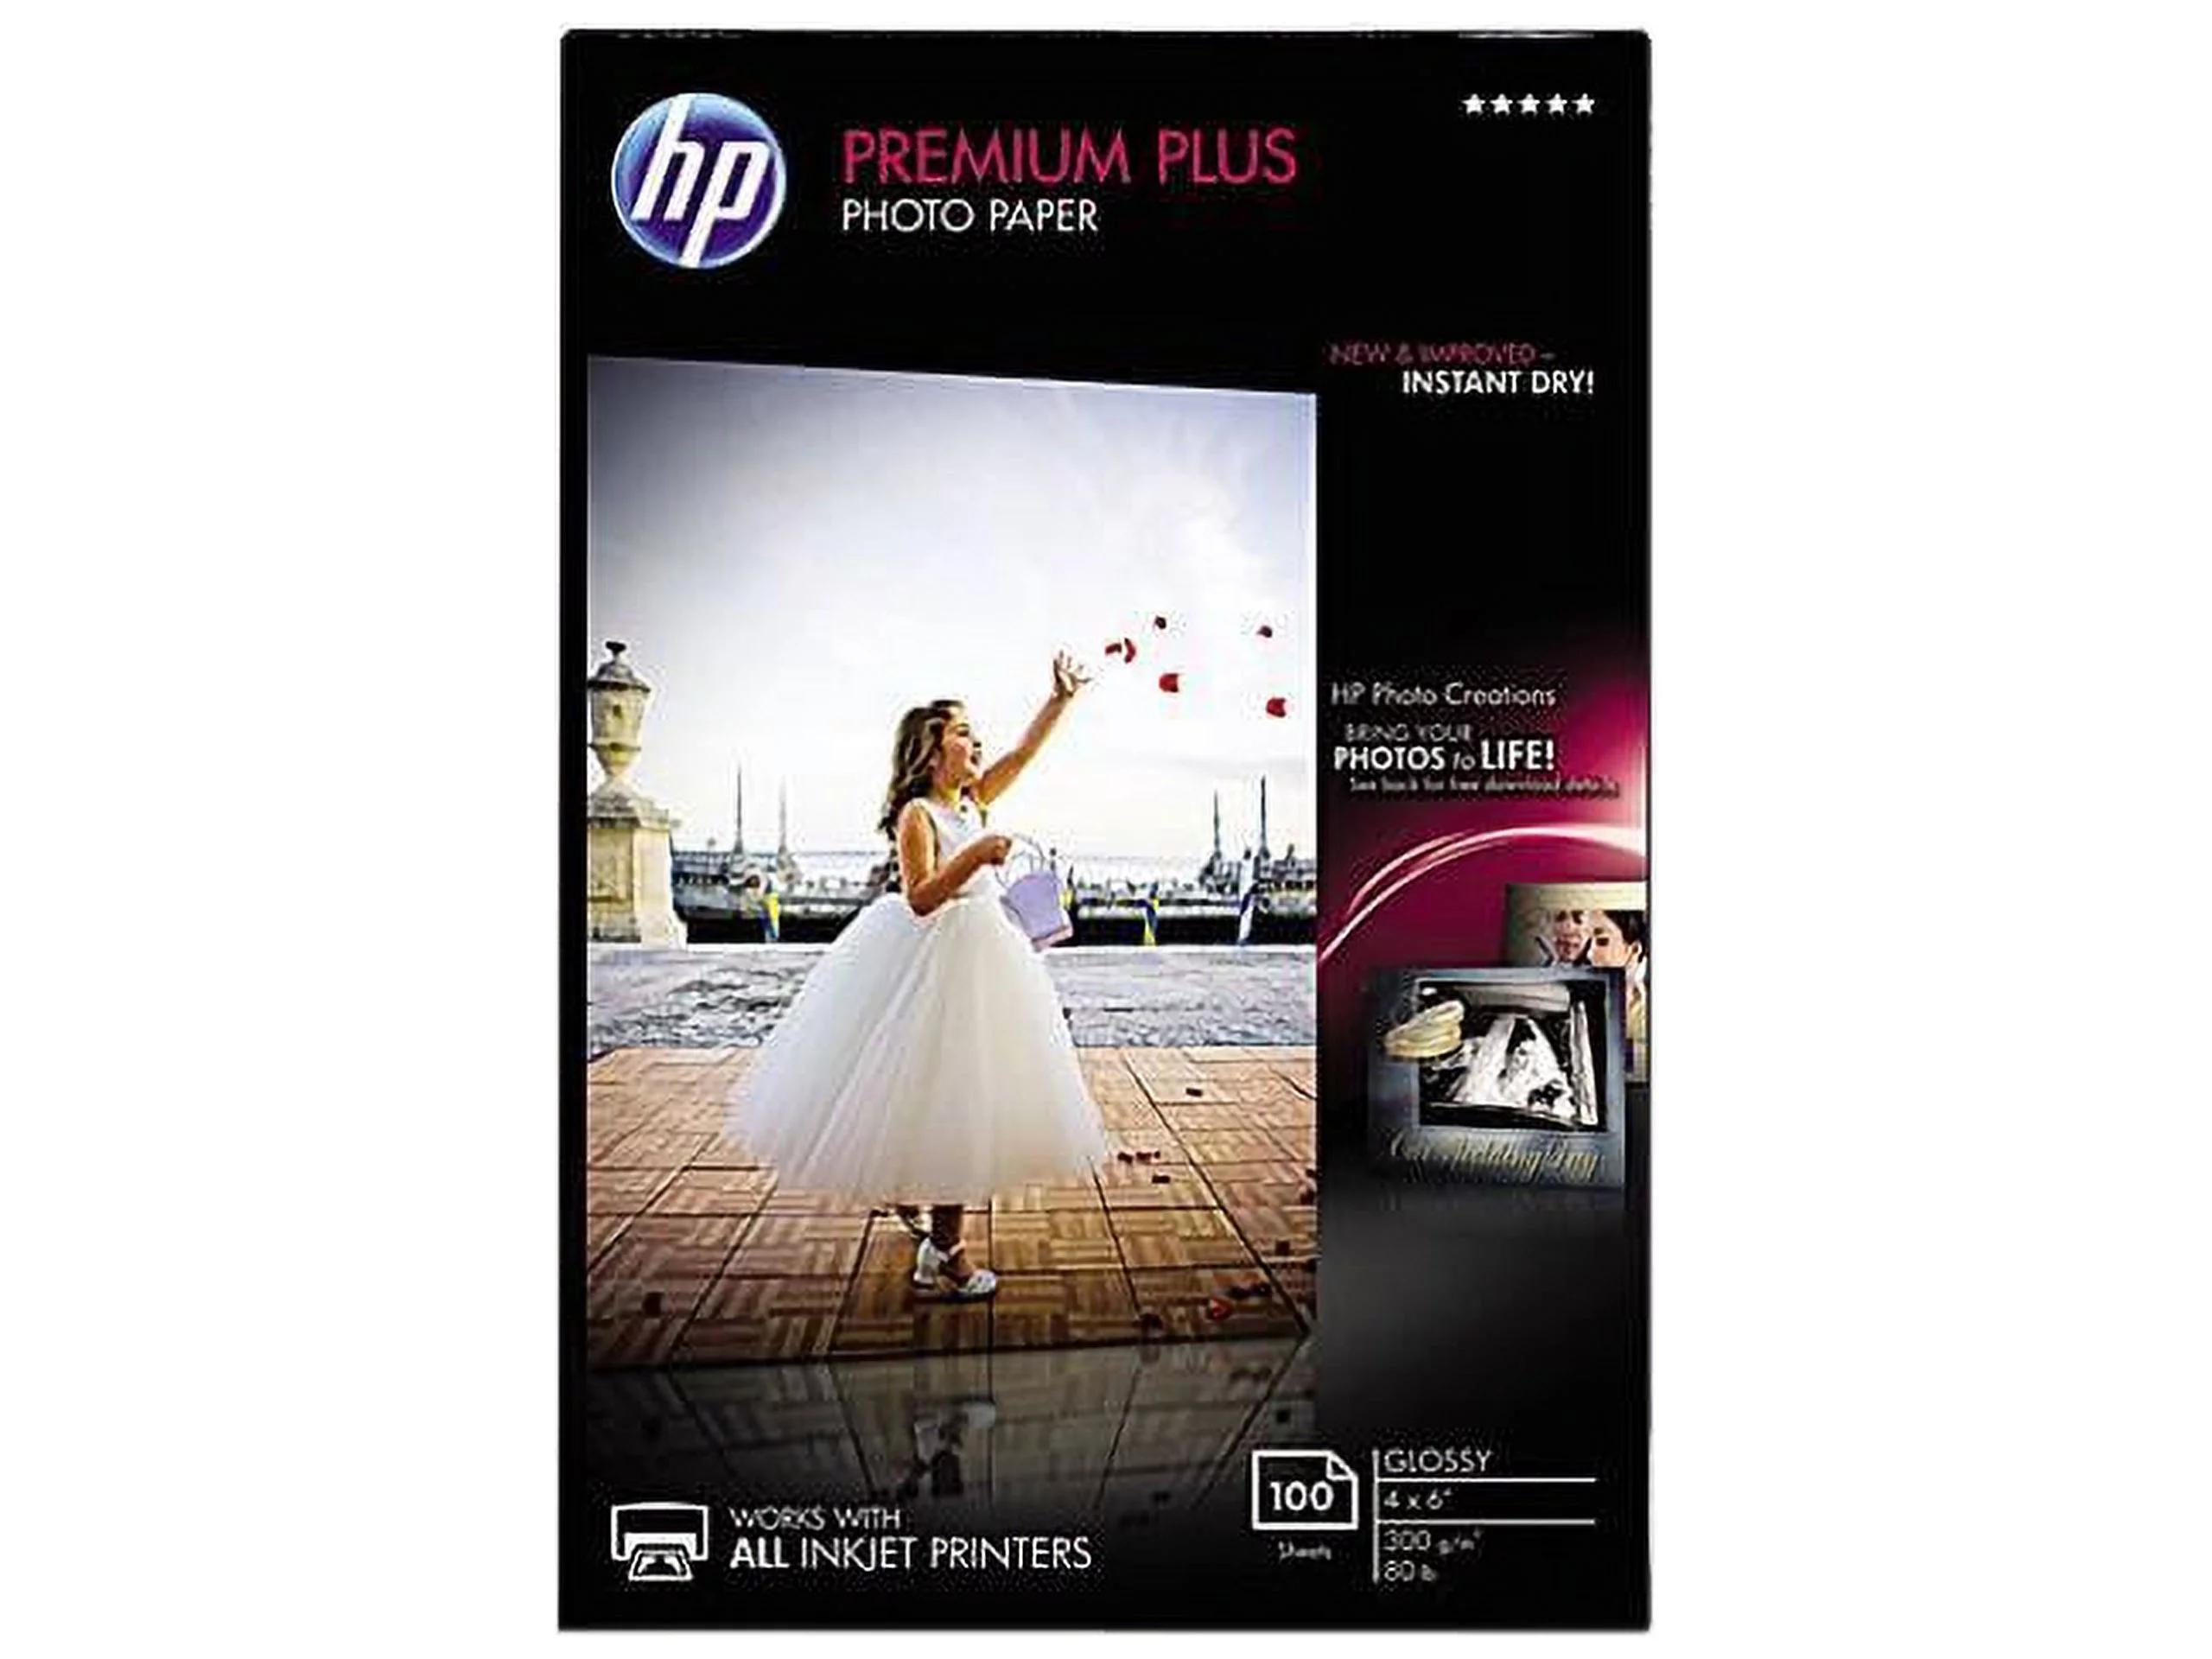 hewlett packard photo paper premium plus - What is photo premium paper